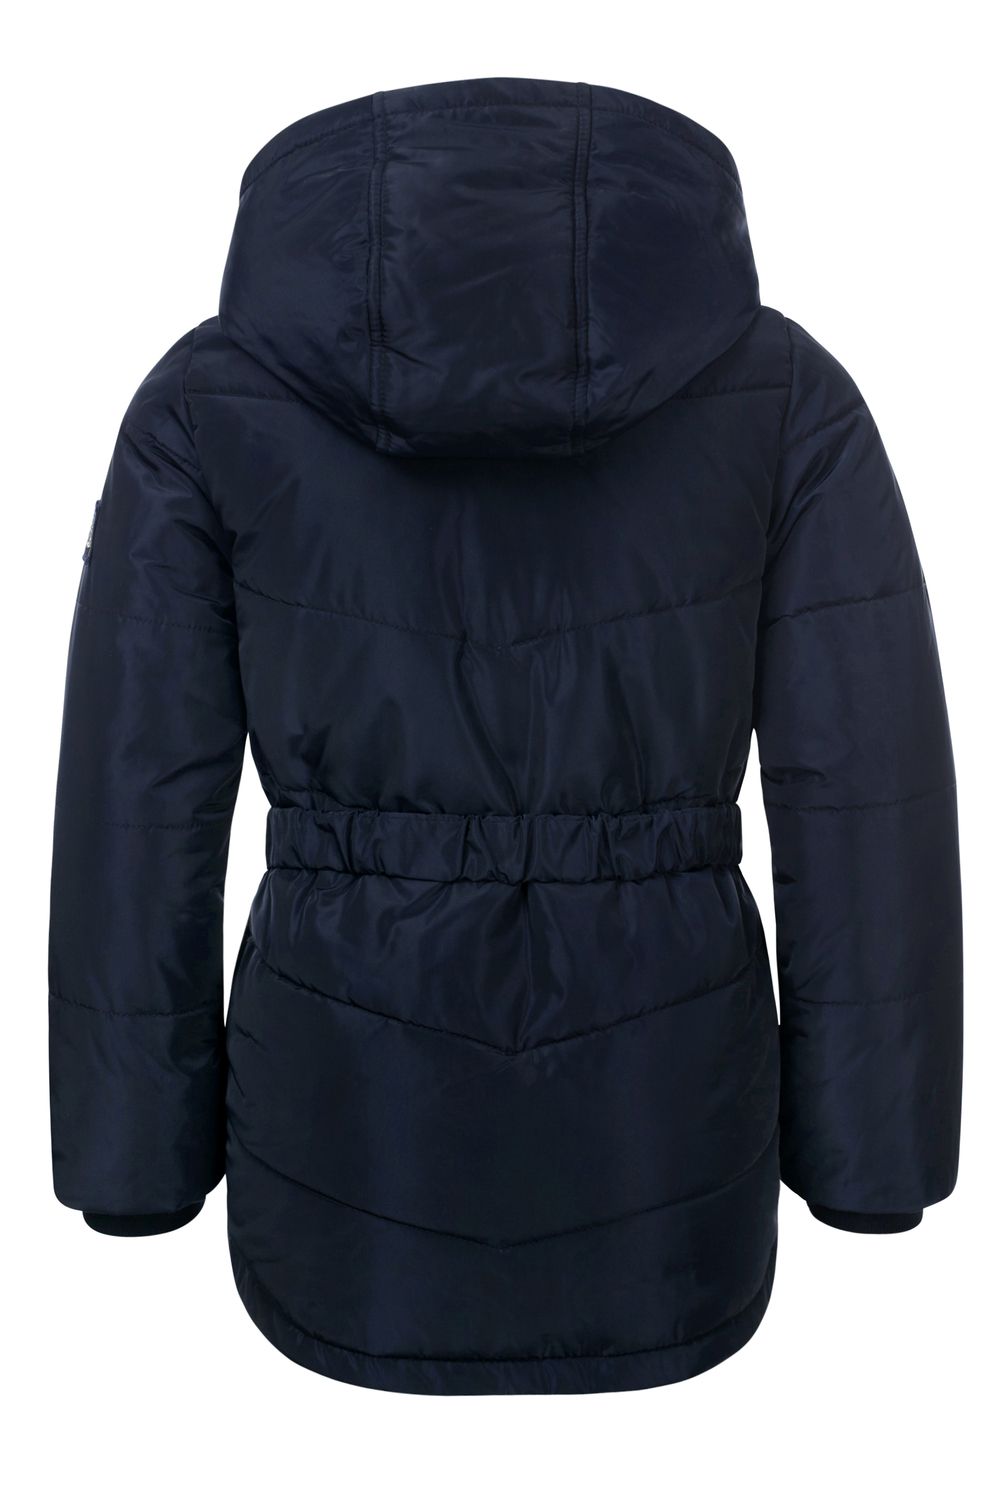 Meisjes Girls Parka outerwear jacket van Looxs in de kleur Midnight in maat 164.